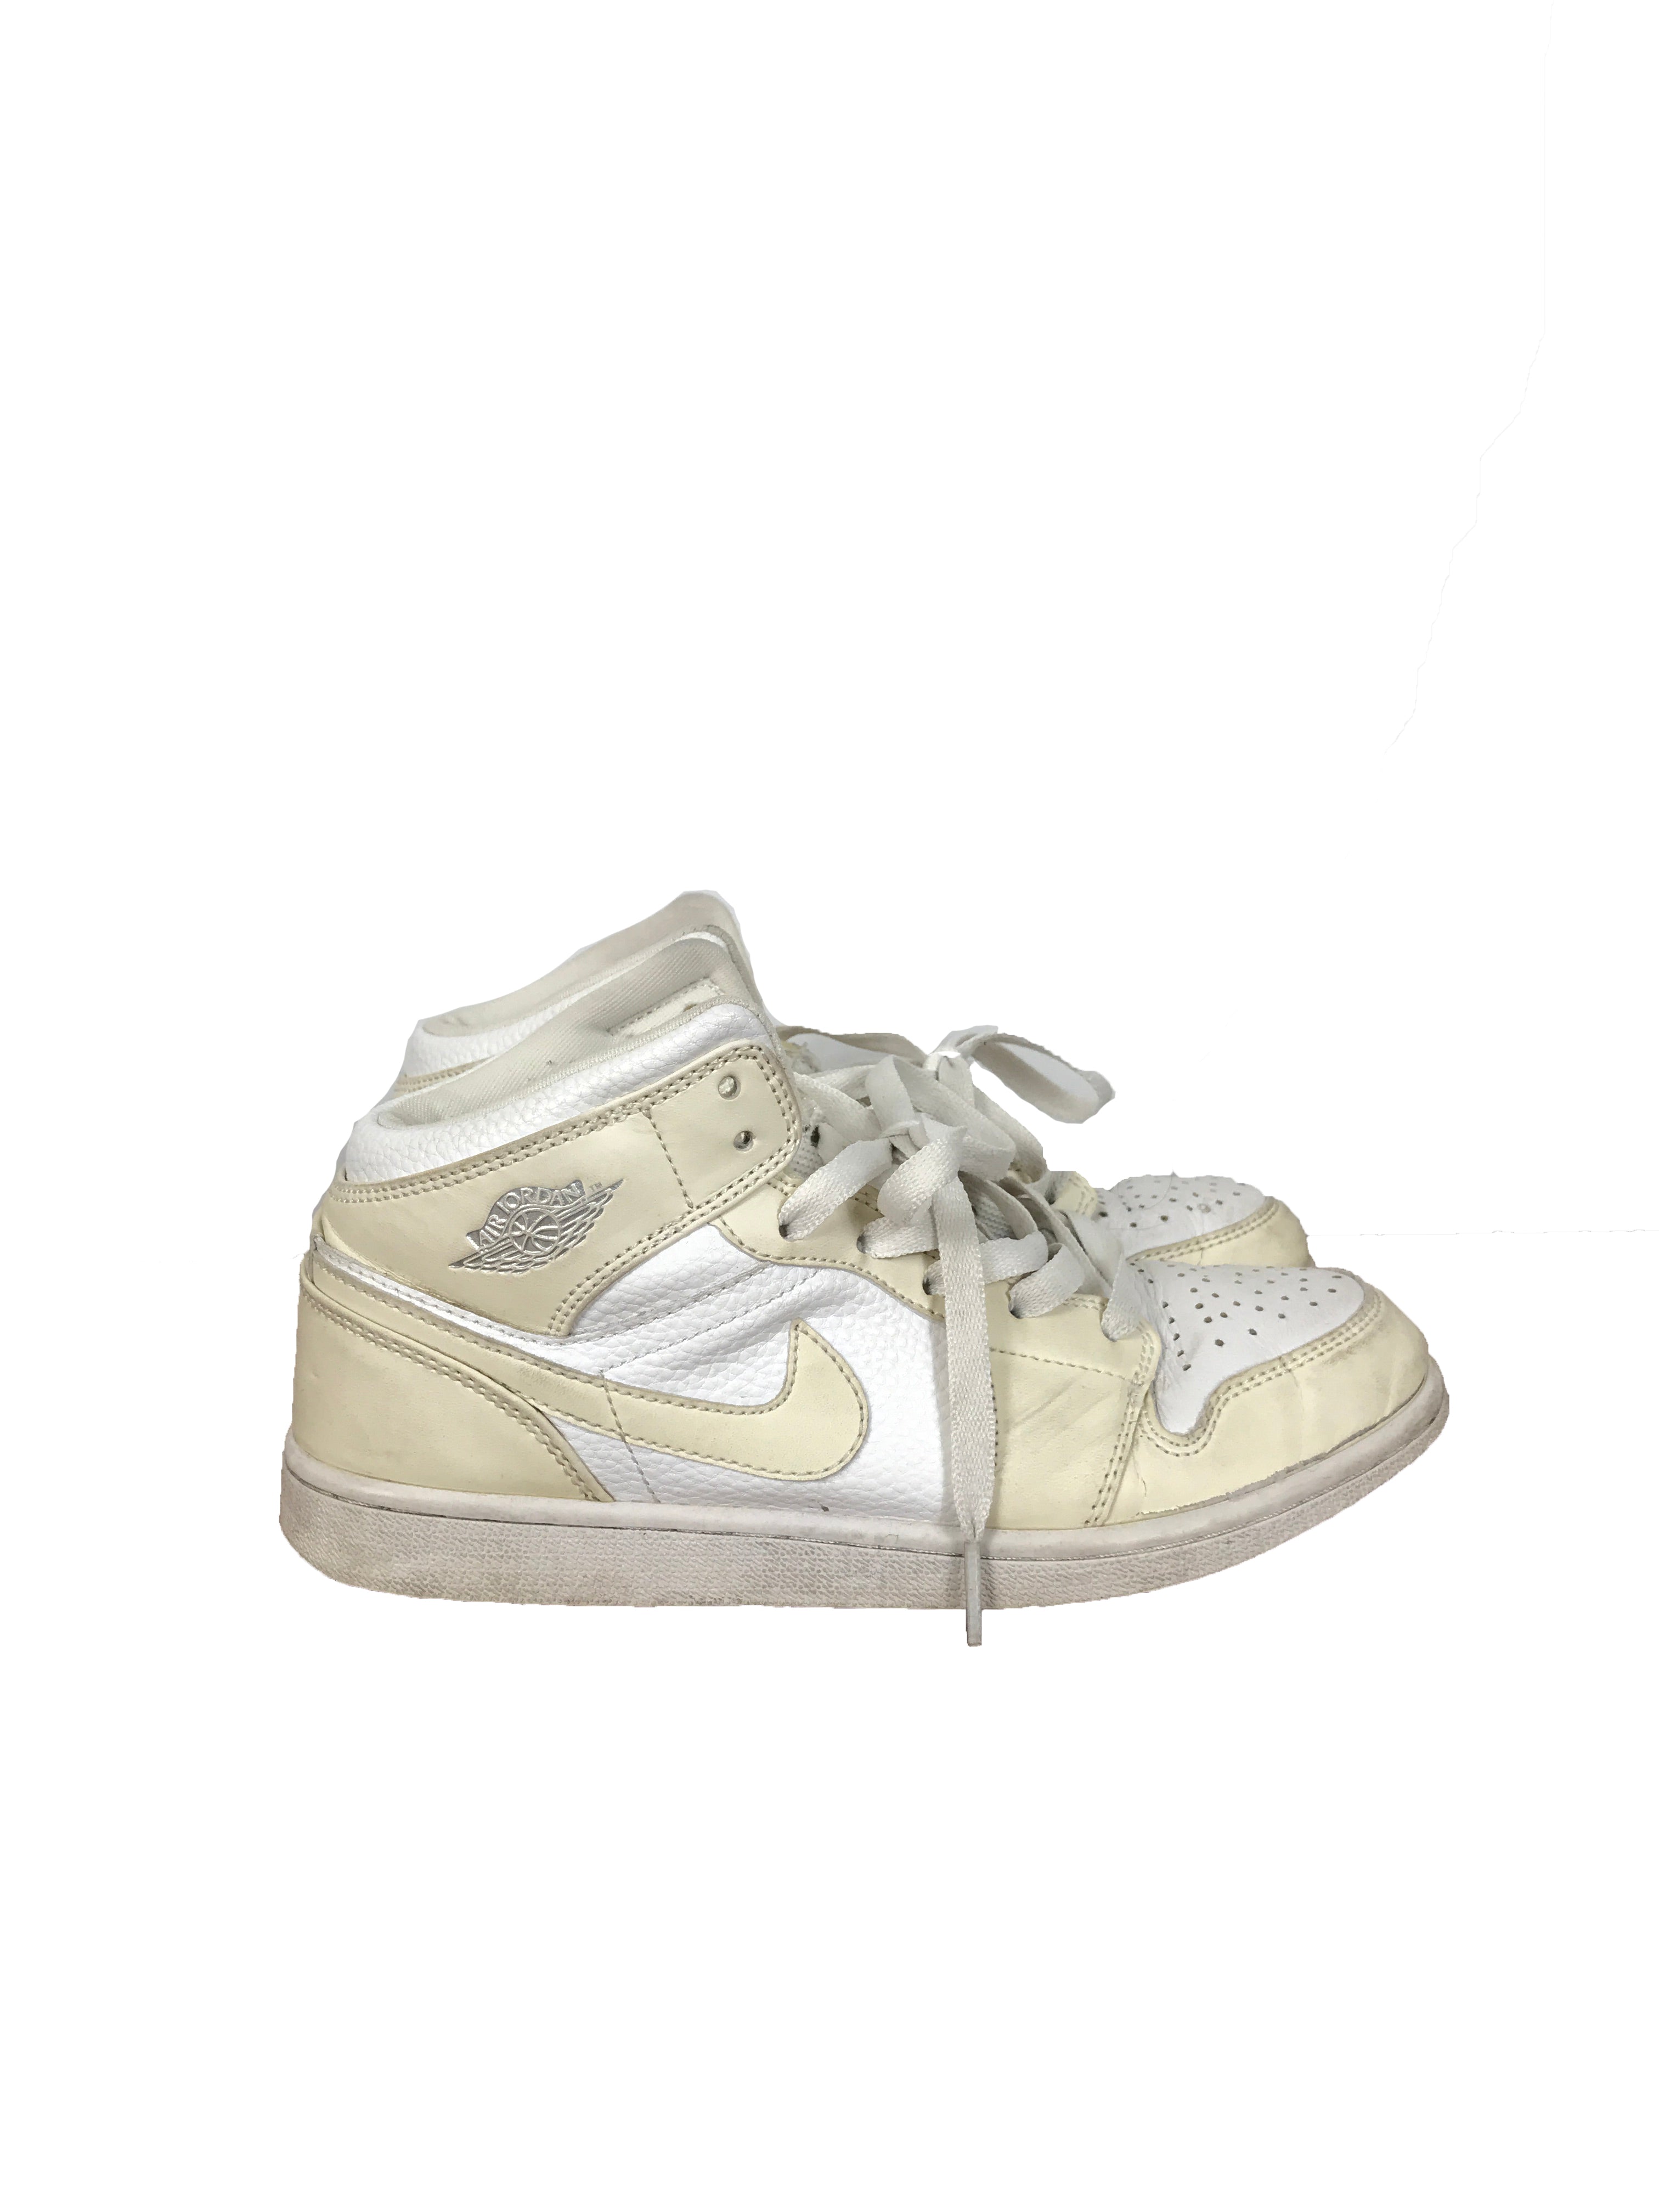 Nike Air Jordan Two-Tone Shoes Kid's Size 5Y